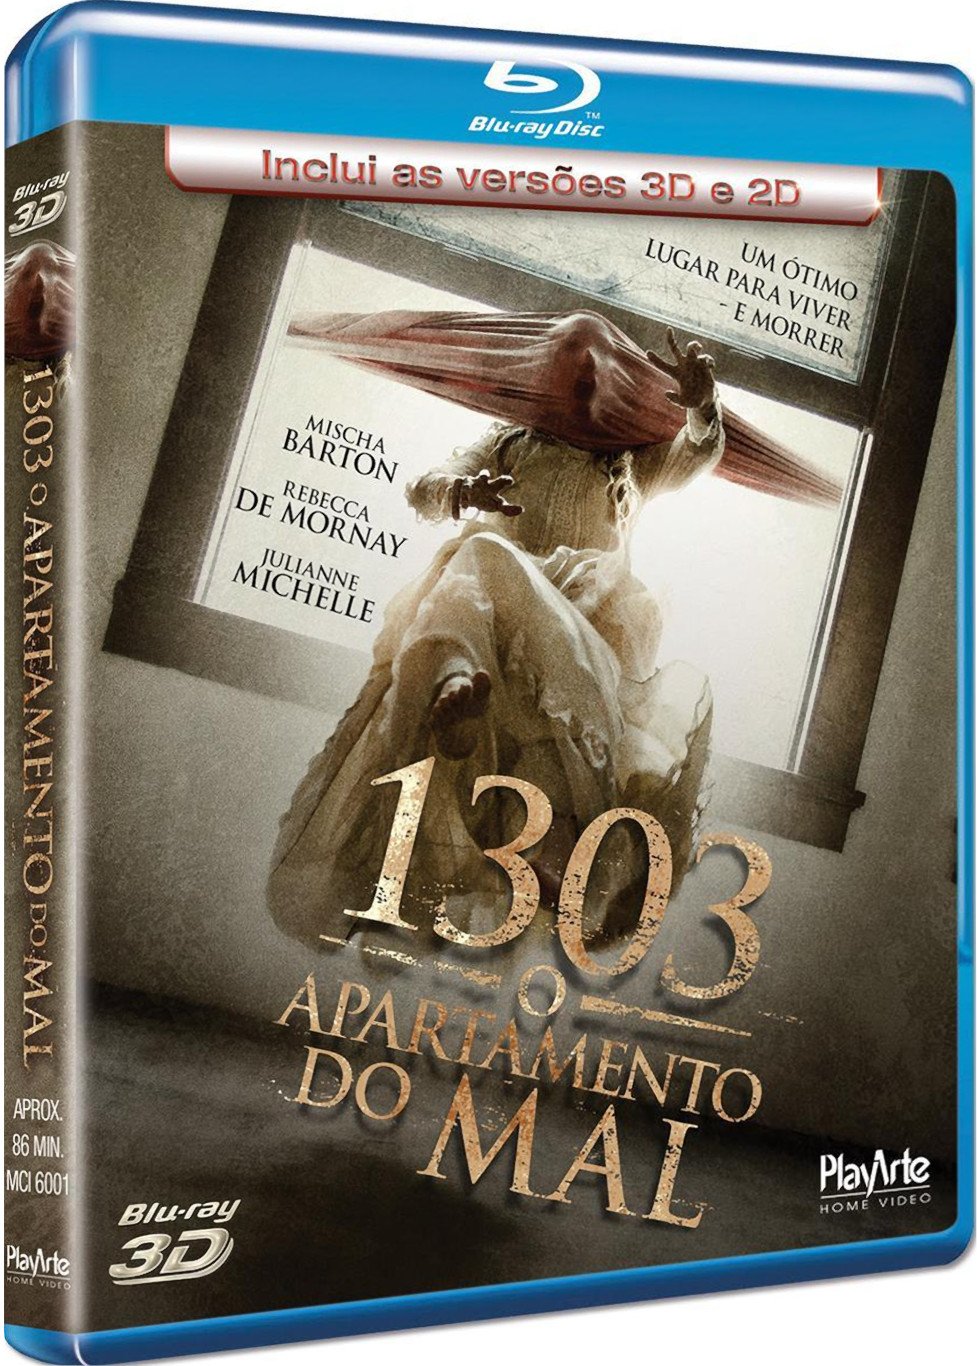 1303: O APARTAMENTO DO MAL - Blu-ray